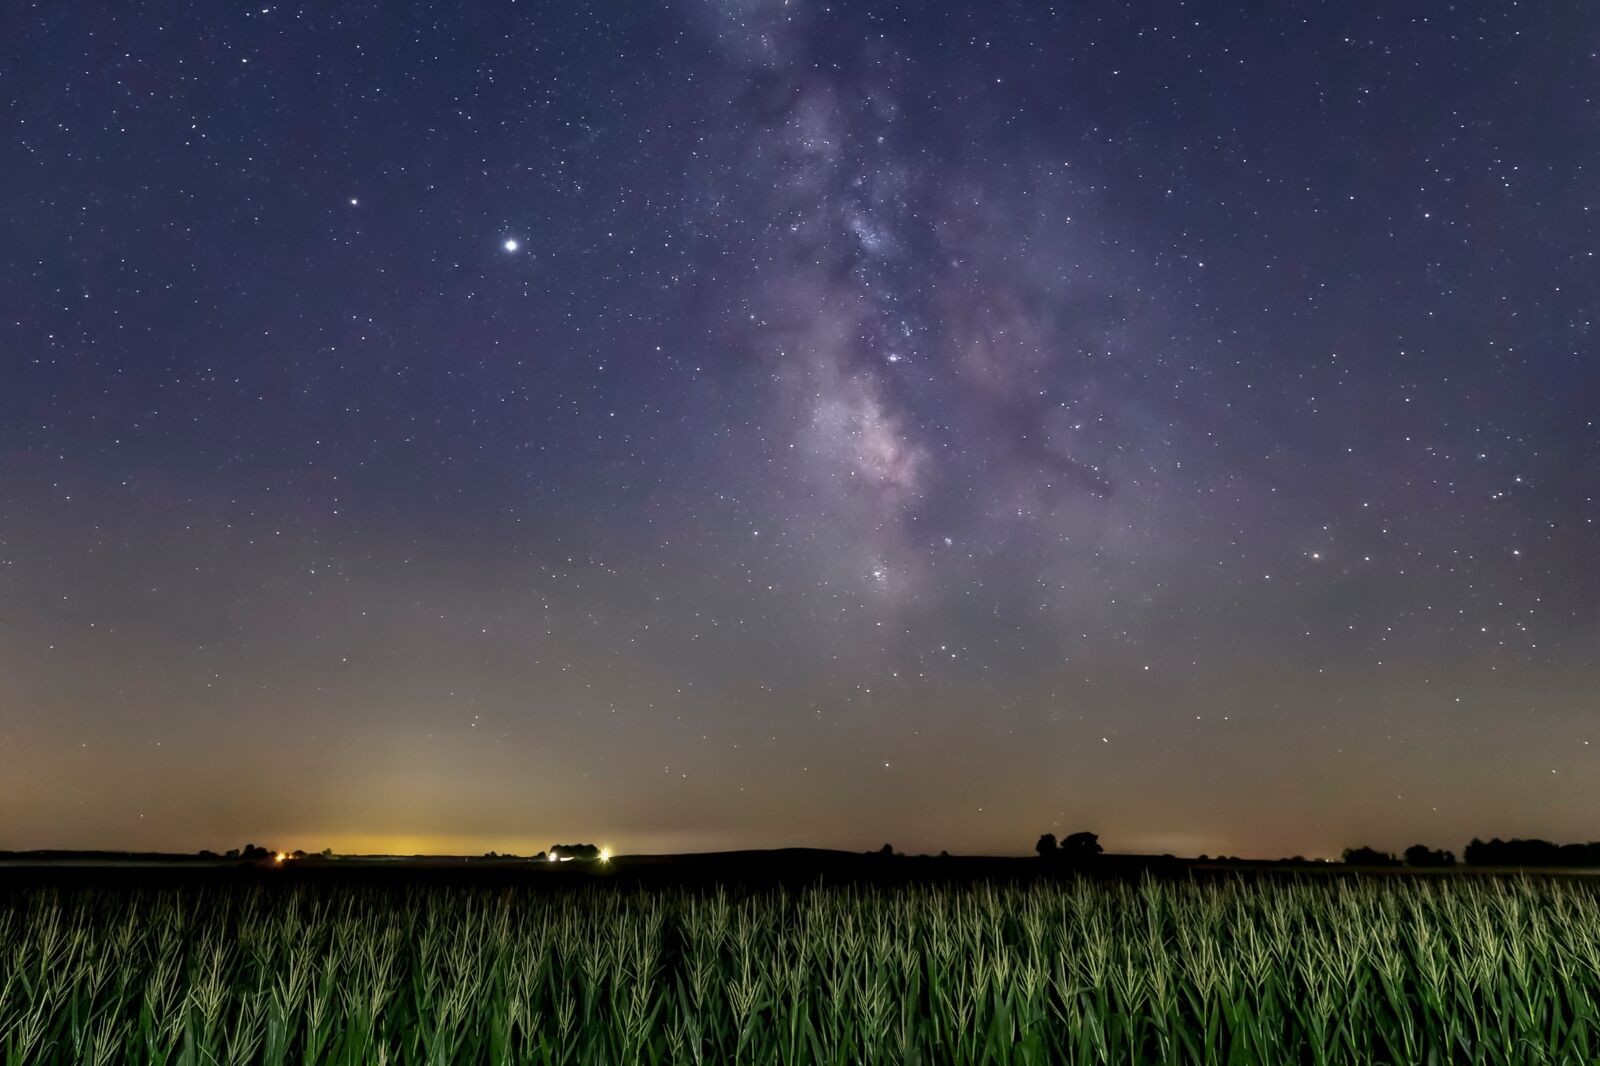 The Milky Way Galaxy arcs through a starry summer dark sky over an Indiana